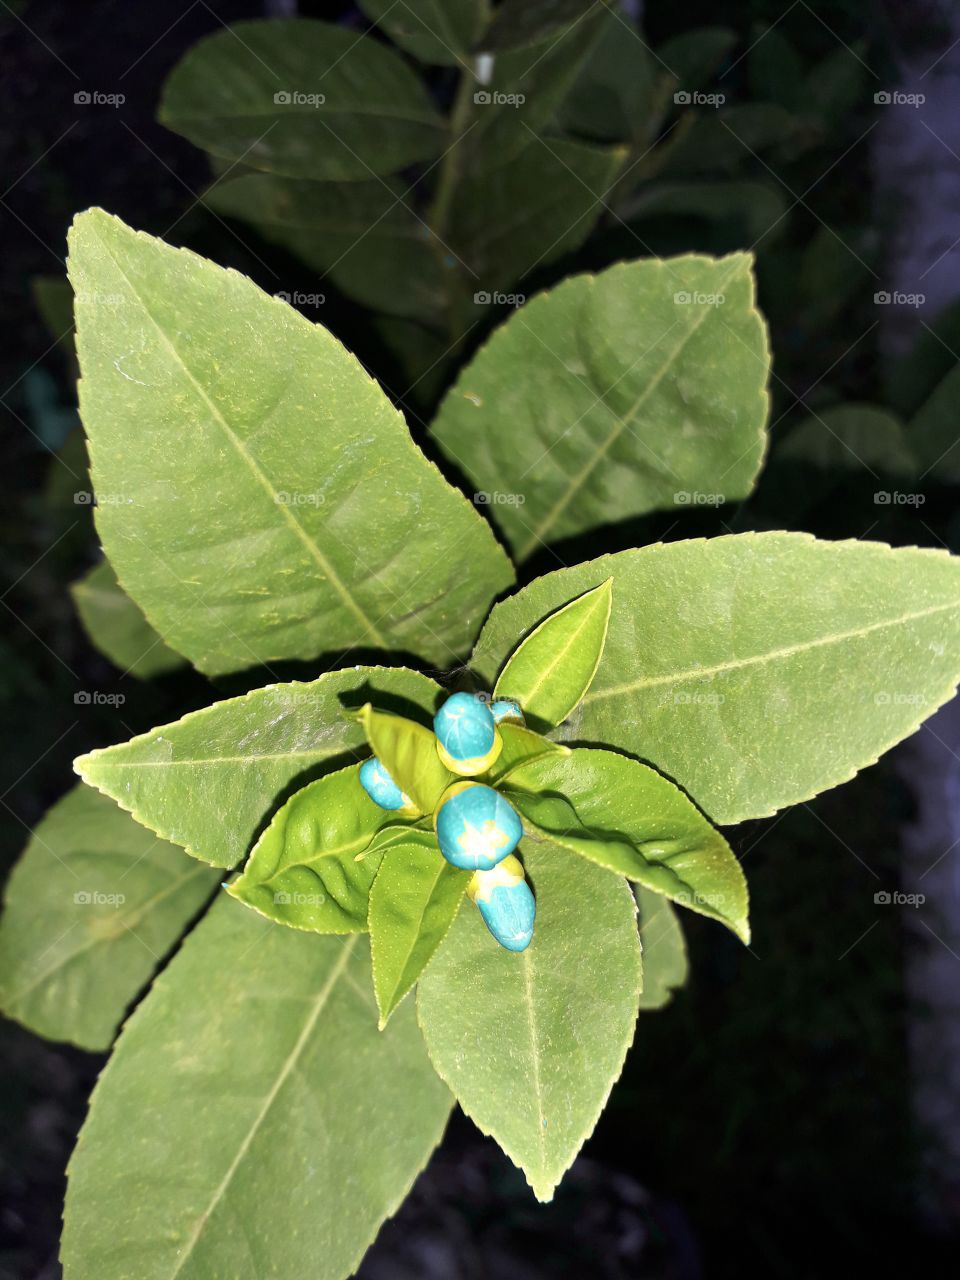 The tiny blue flower